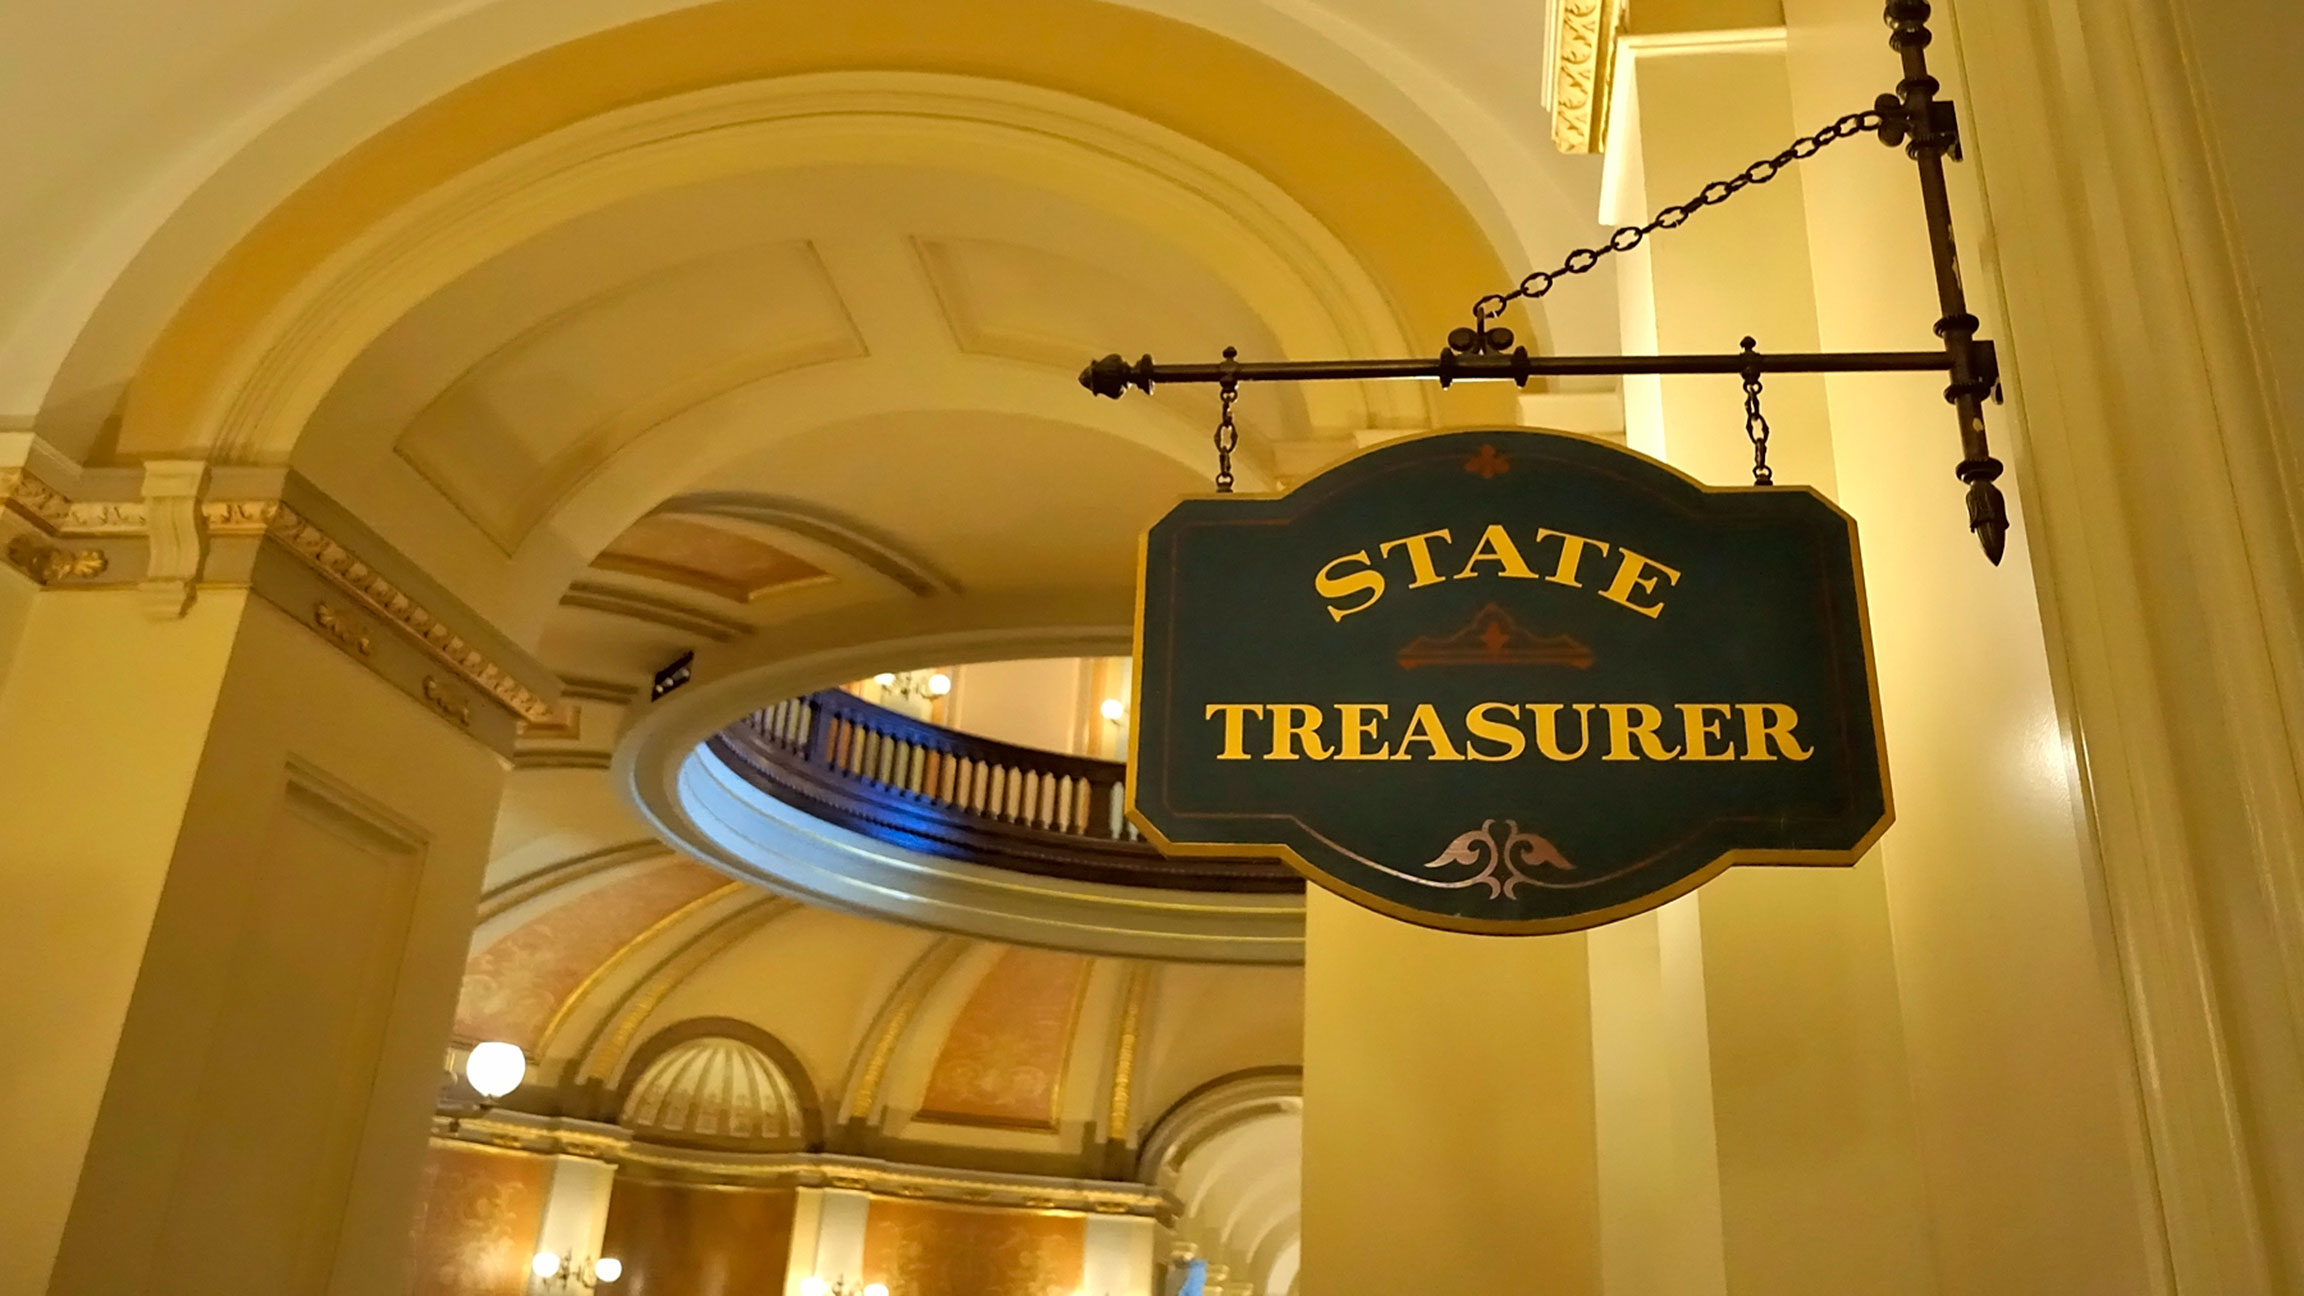 State treasurer